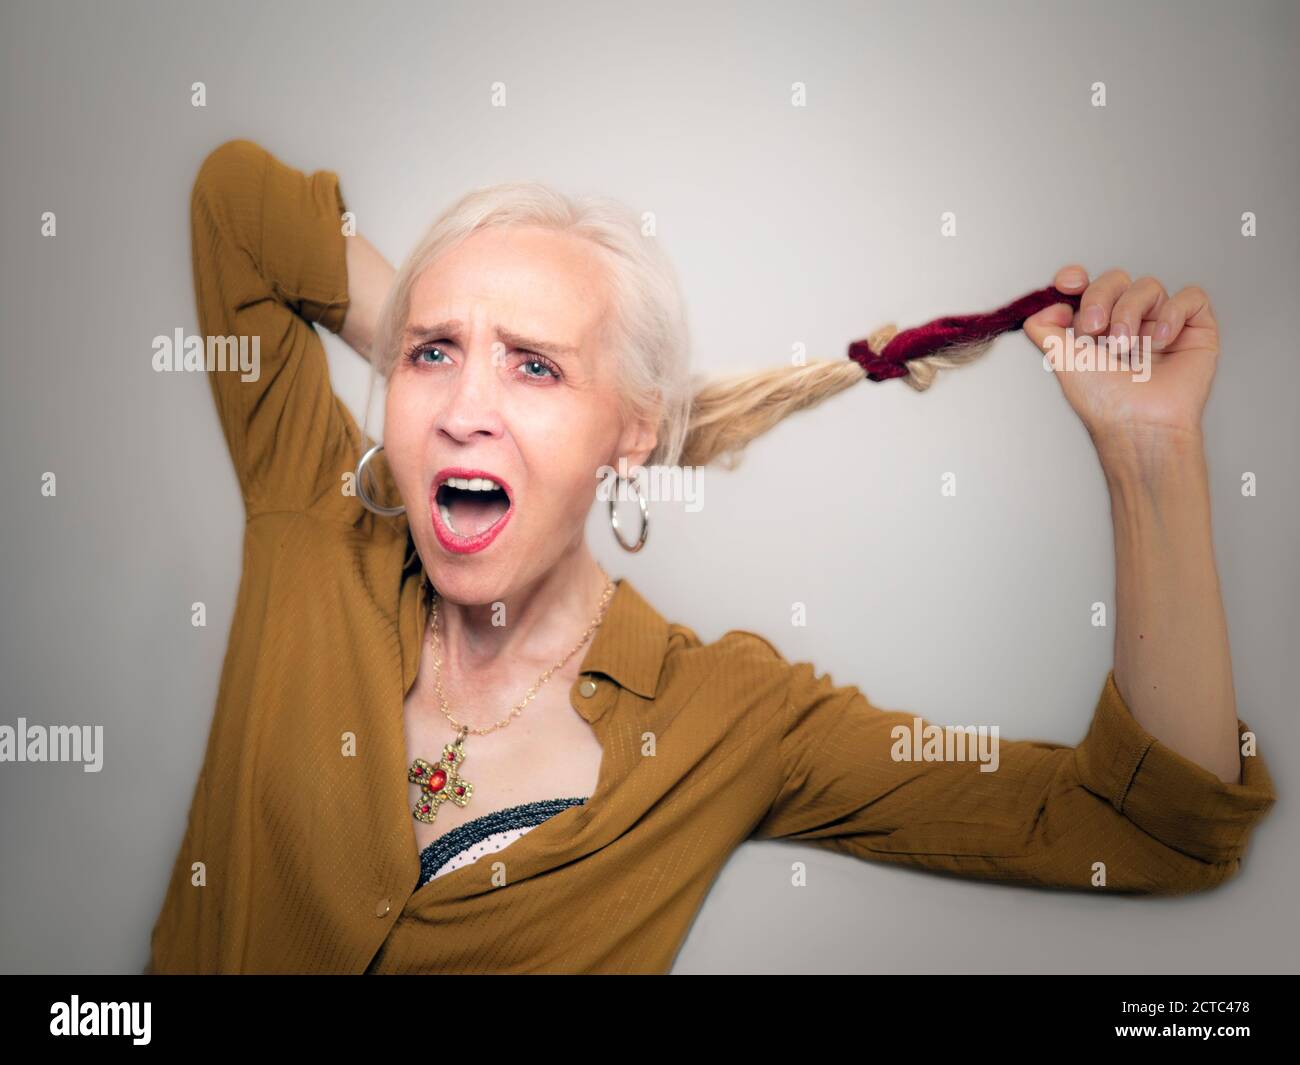 horizontal portrait of an elegant beautiful woman shouting while releasing her hair Stock Photo